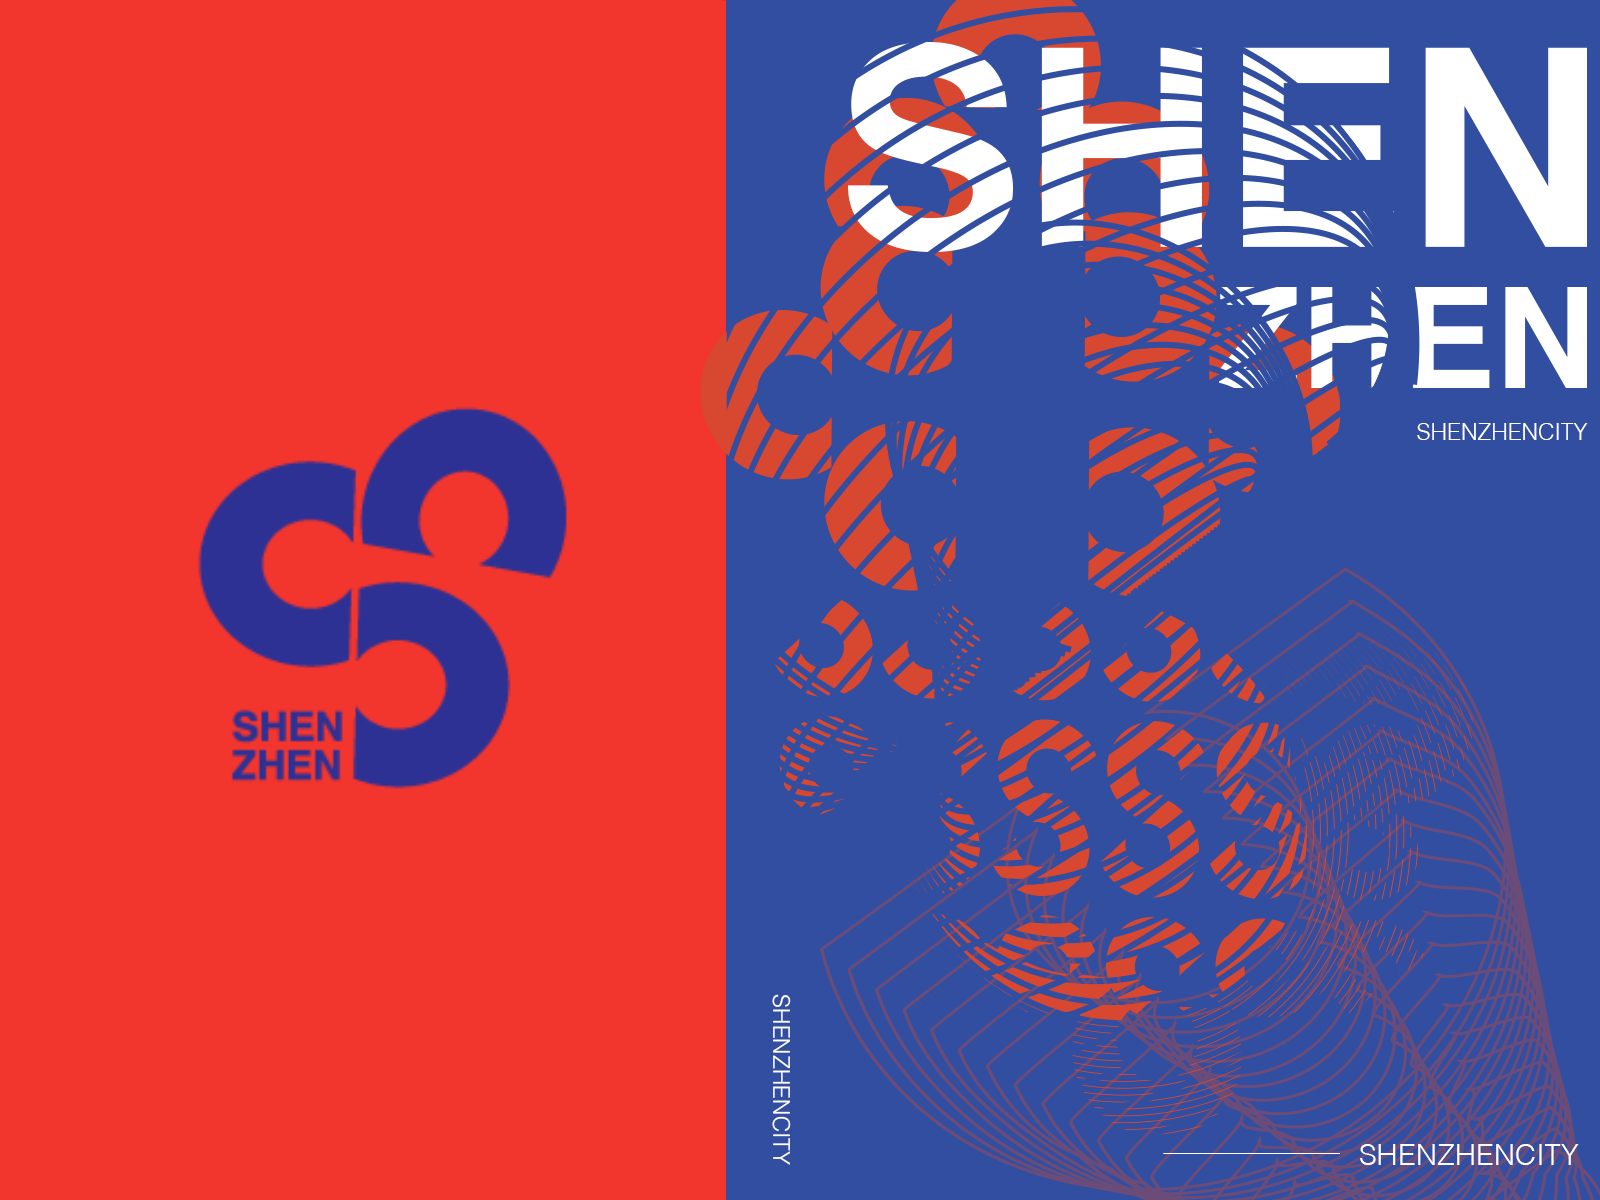 Shenzhen city image design